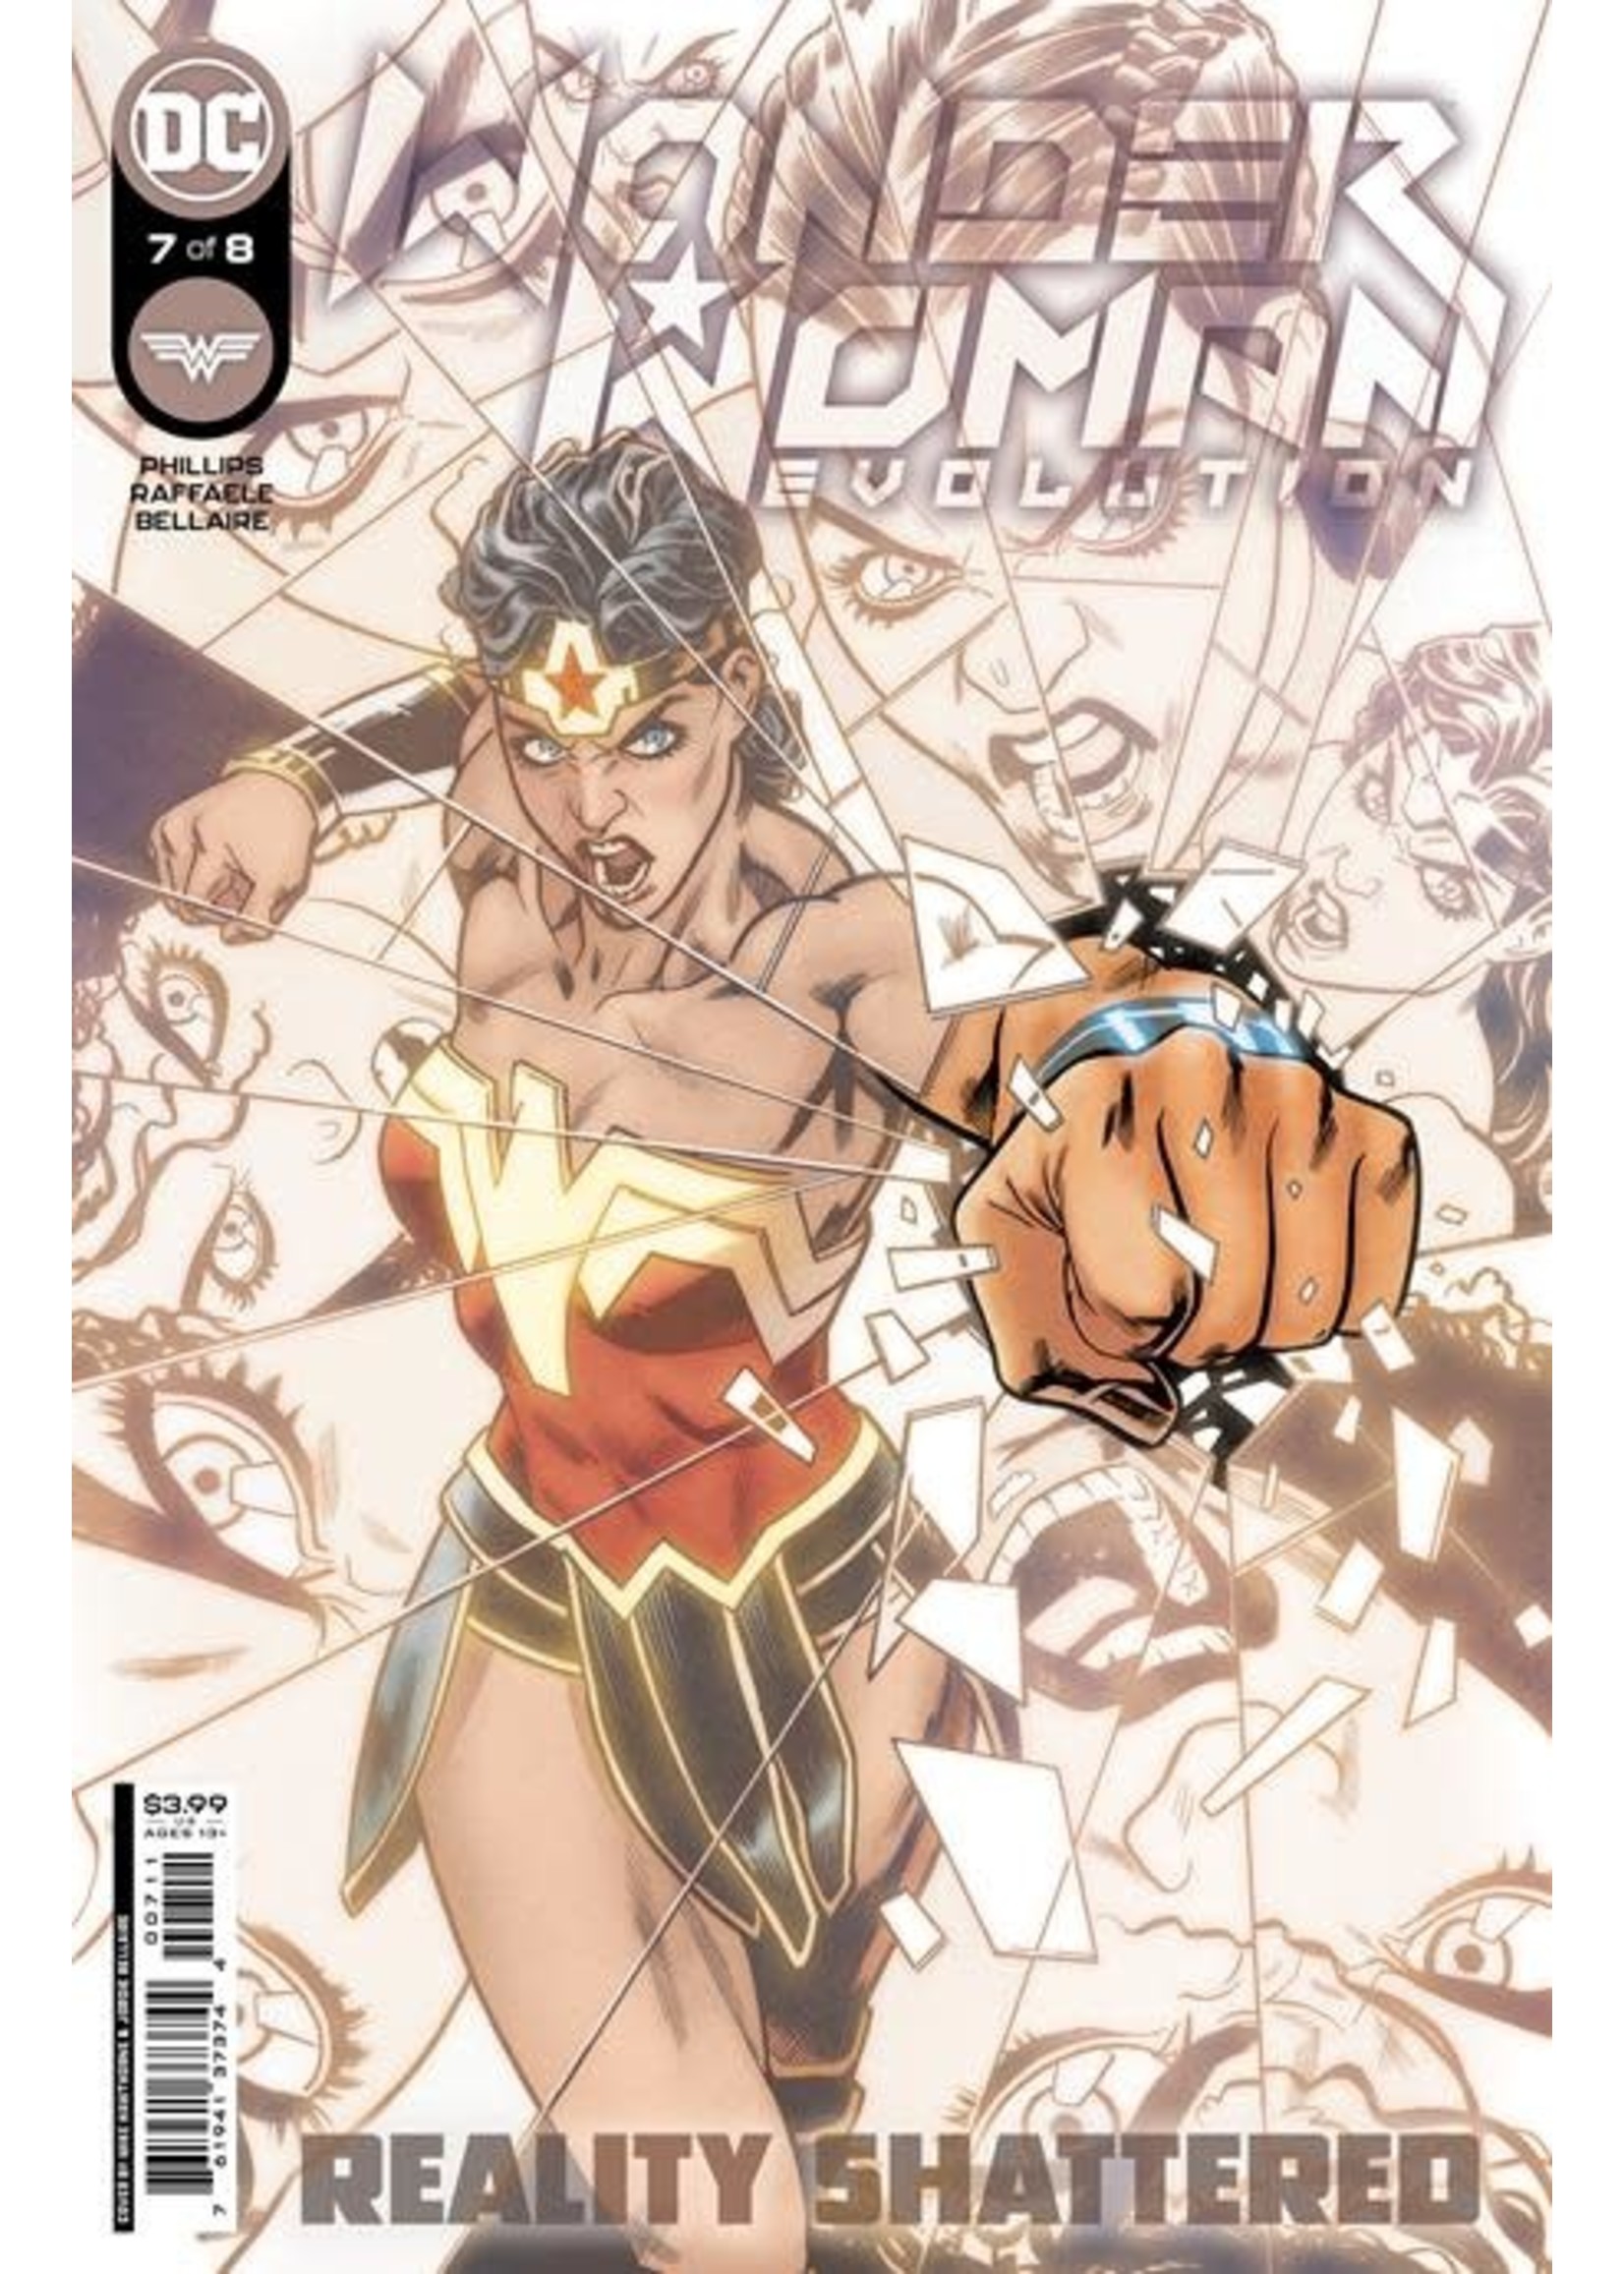 DC COMICS WONDER WOMAN EVOLUTION complete 8 issue series